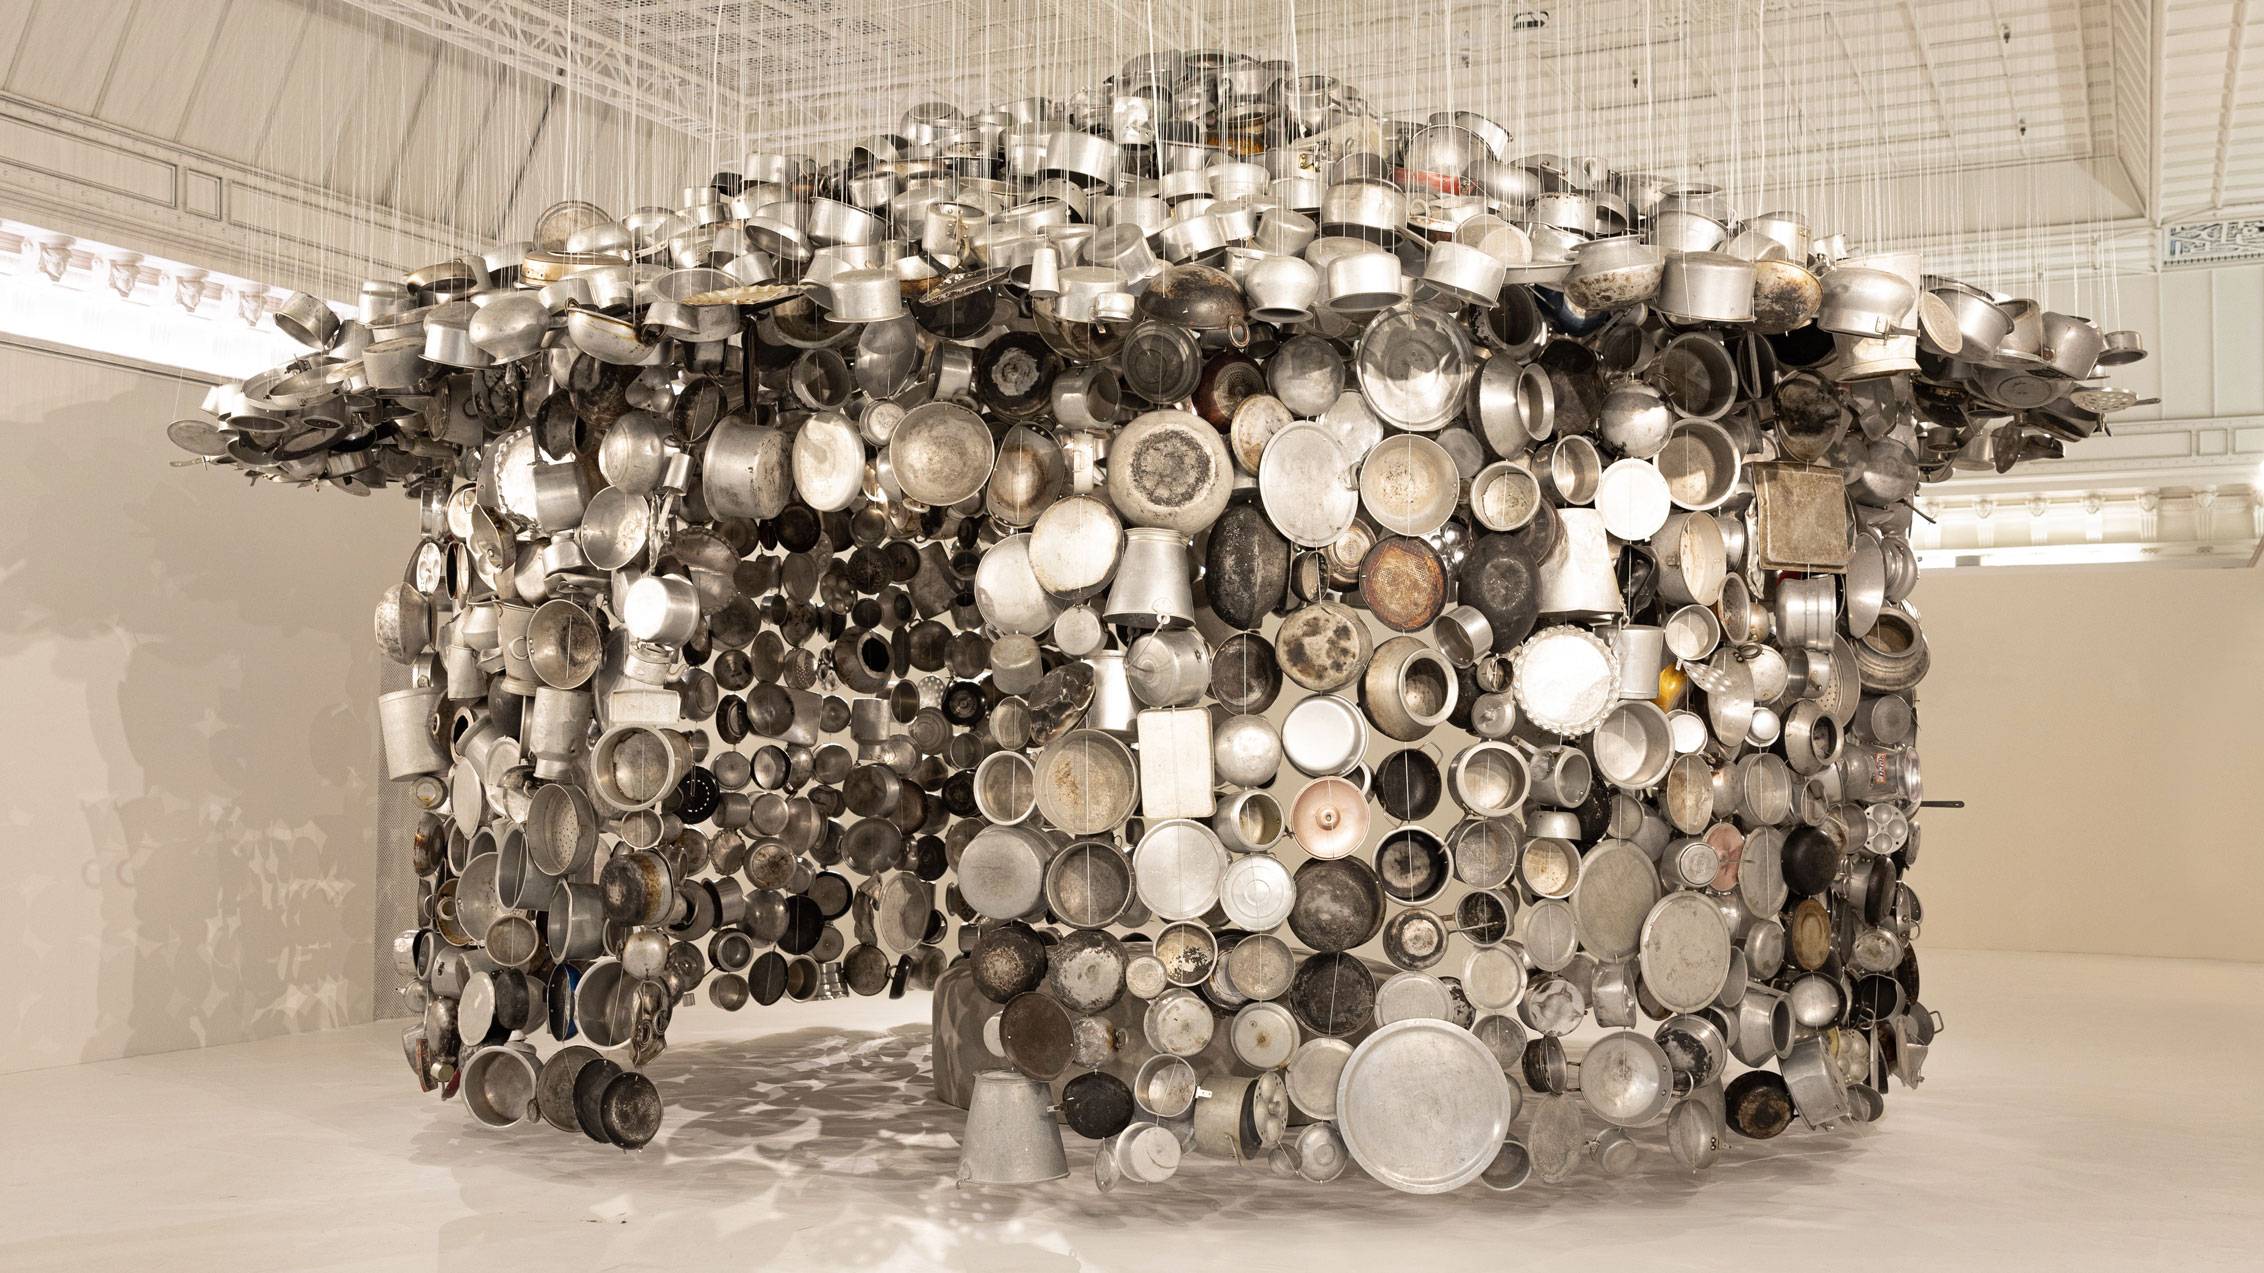 Artist Subodh Gupta casts a cascade of mirrors at Le Bon Marché